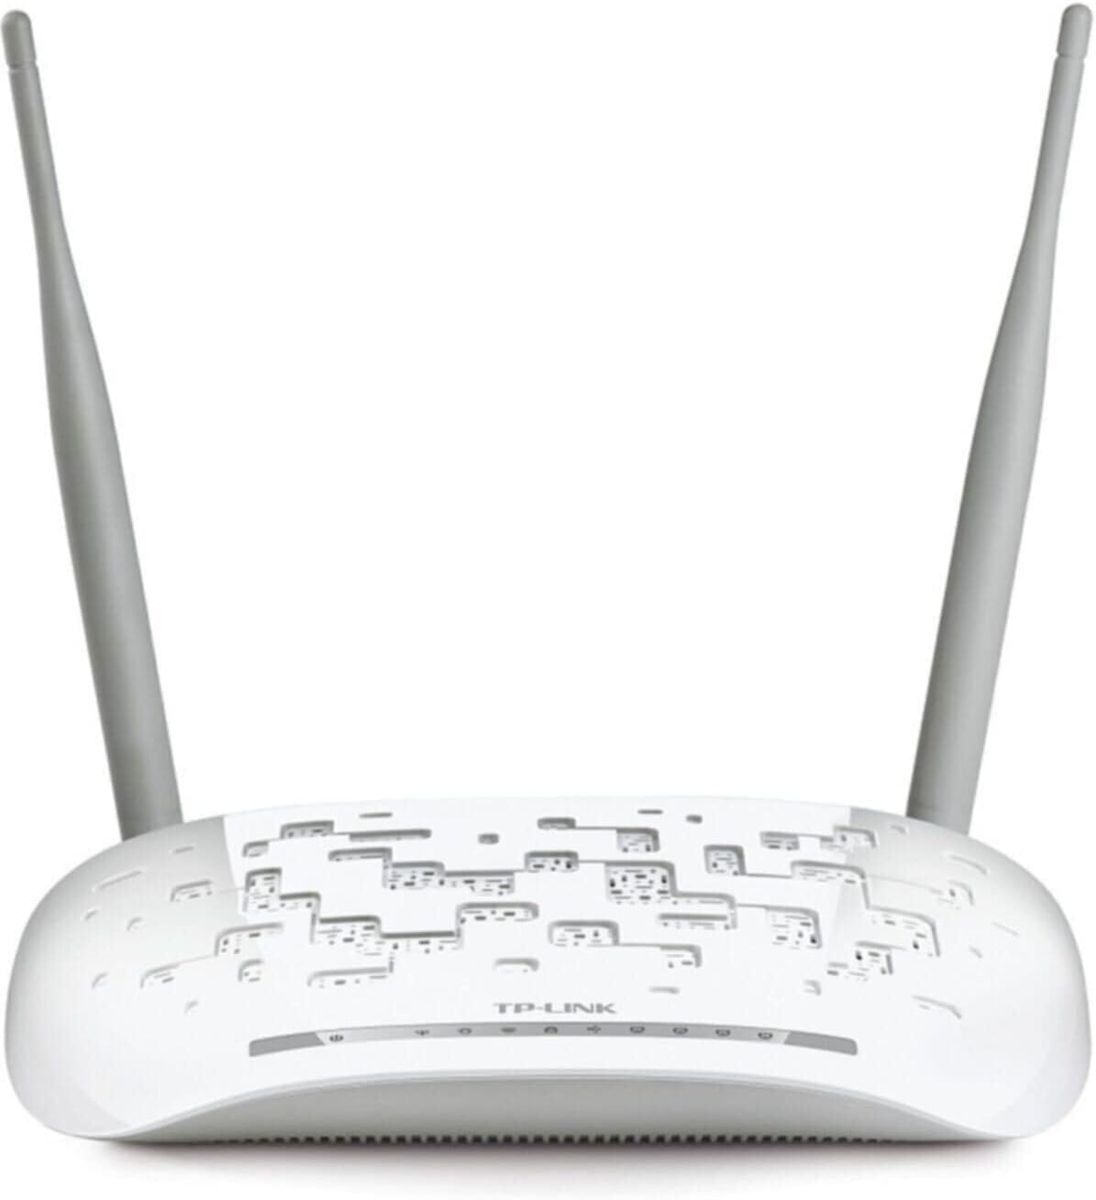 TP-Link TD-W9970 Wireless Modem Router Access Point 300Mbit/s VDSL/ADSL Annex A White v1.0